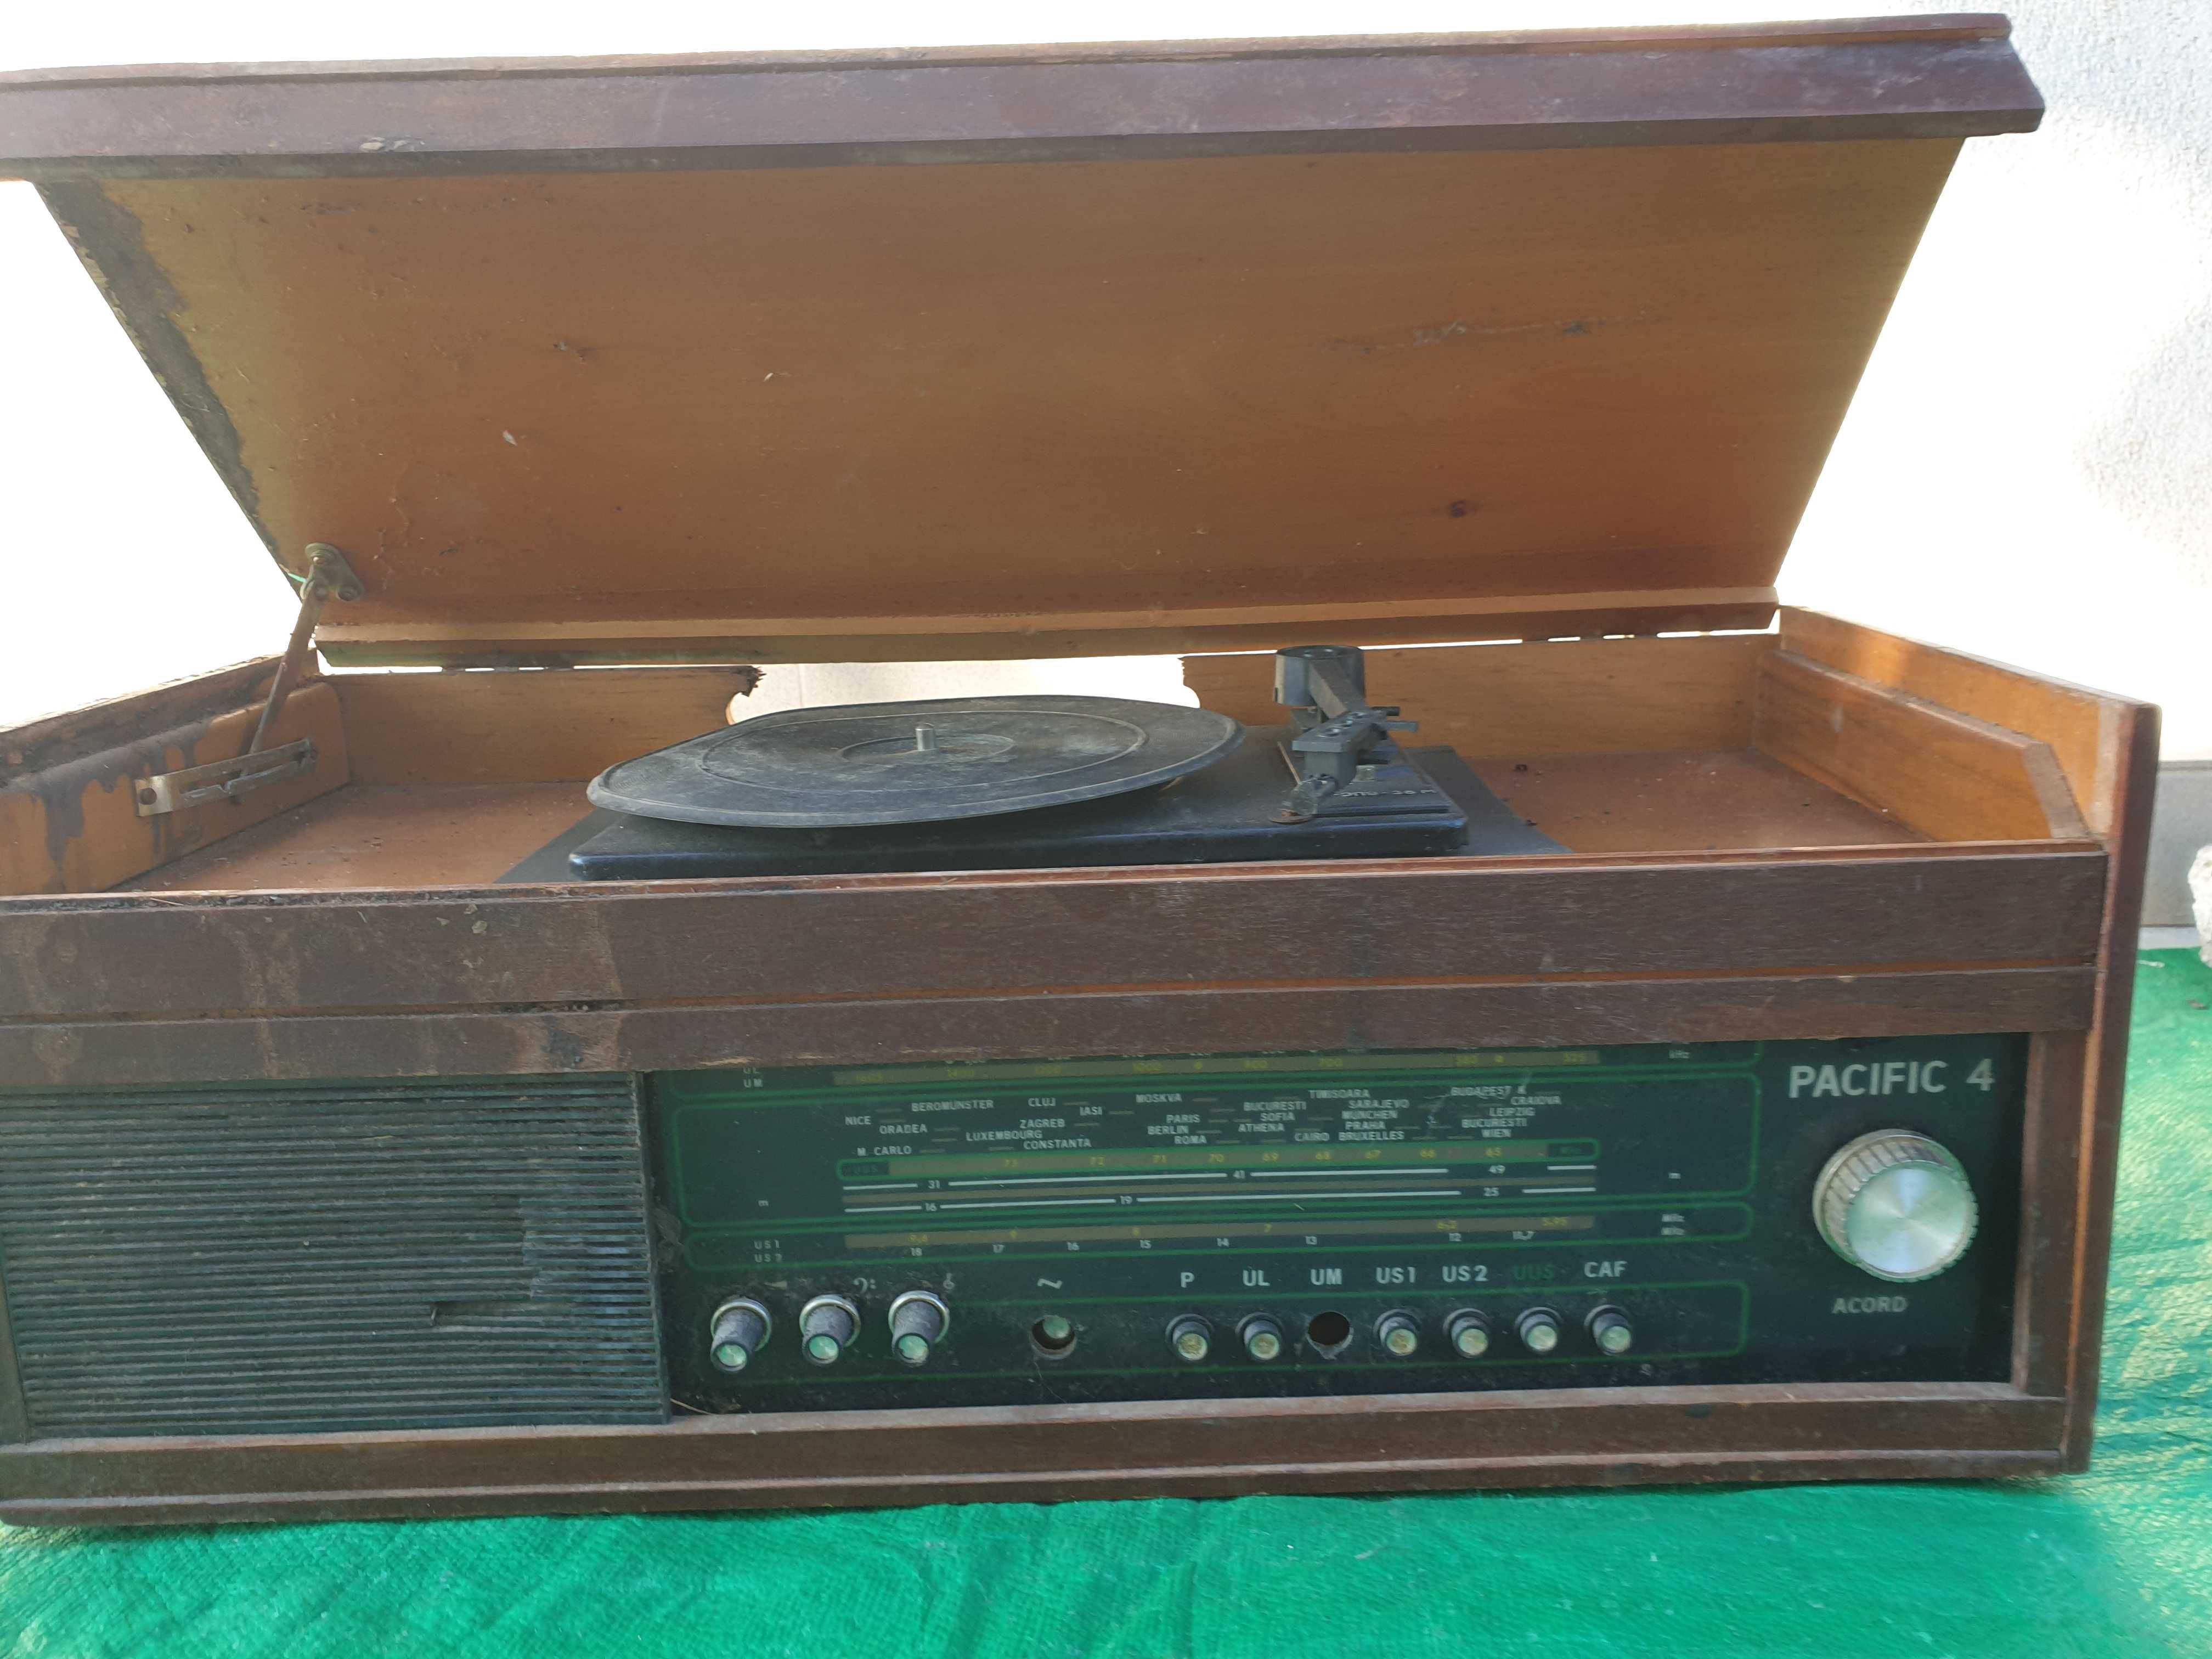 Radio Pacific 4 model RST 7-78,fabricat Electronica; București in 1975